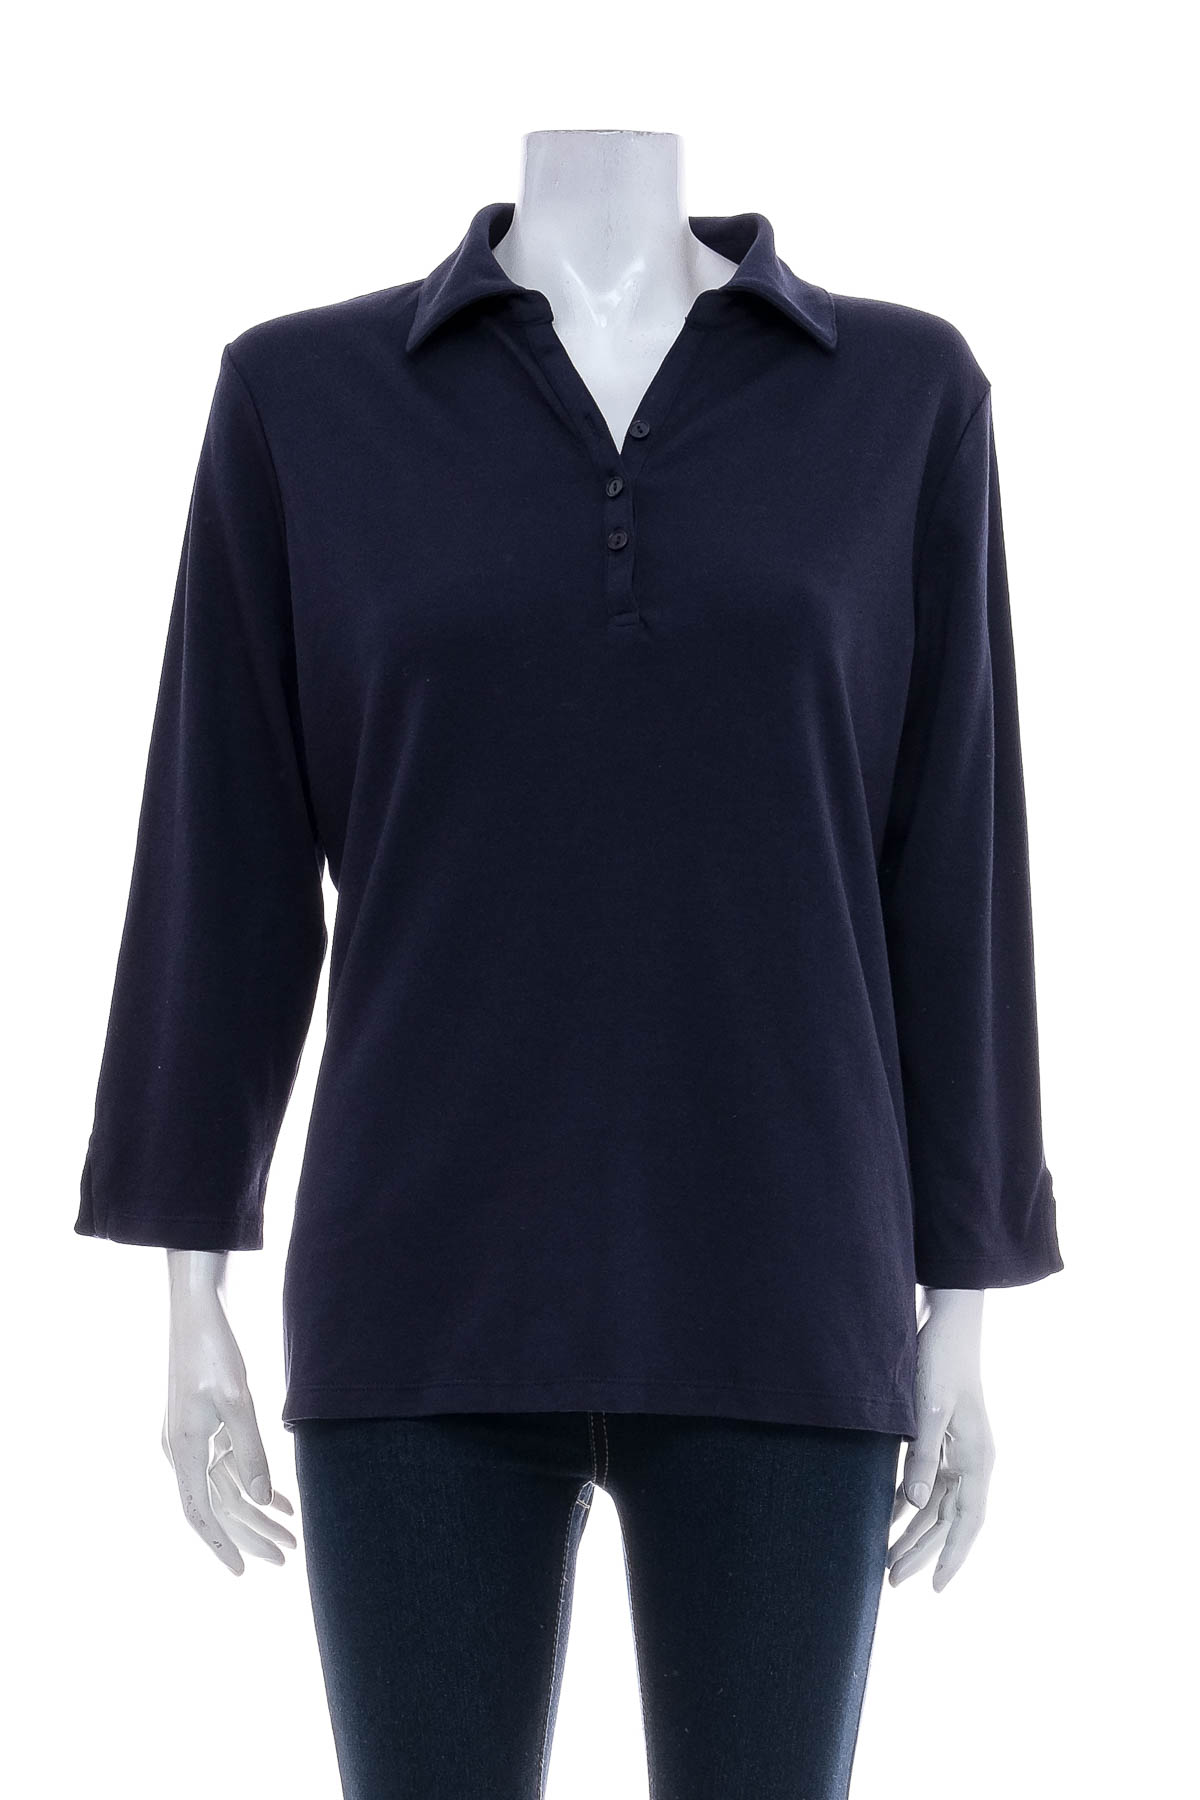 Women's blouse - DRAPER'S & DAMON'S - 0